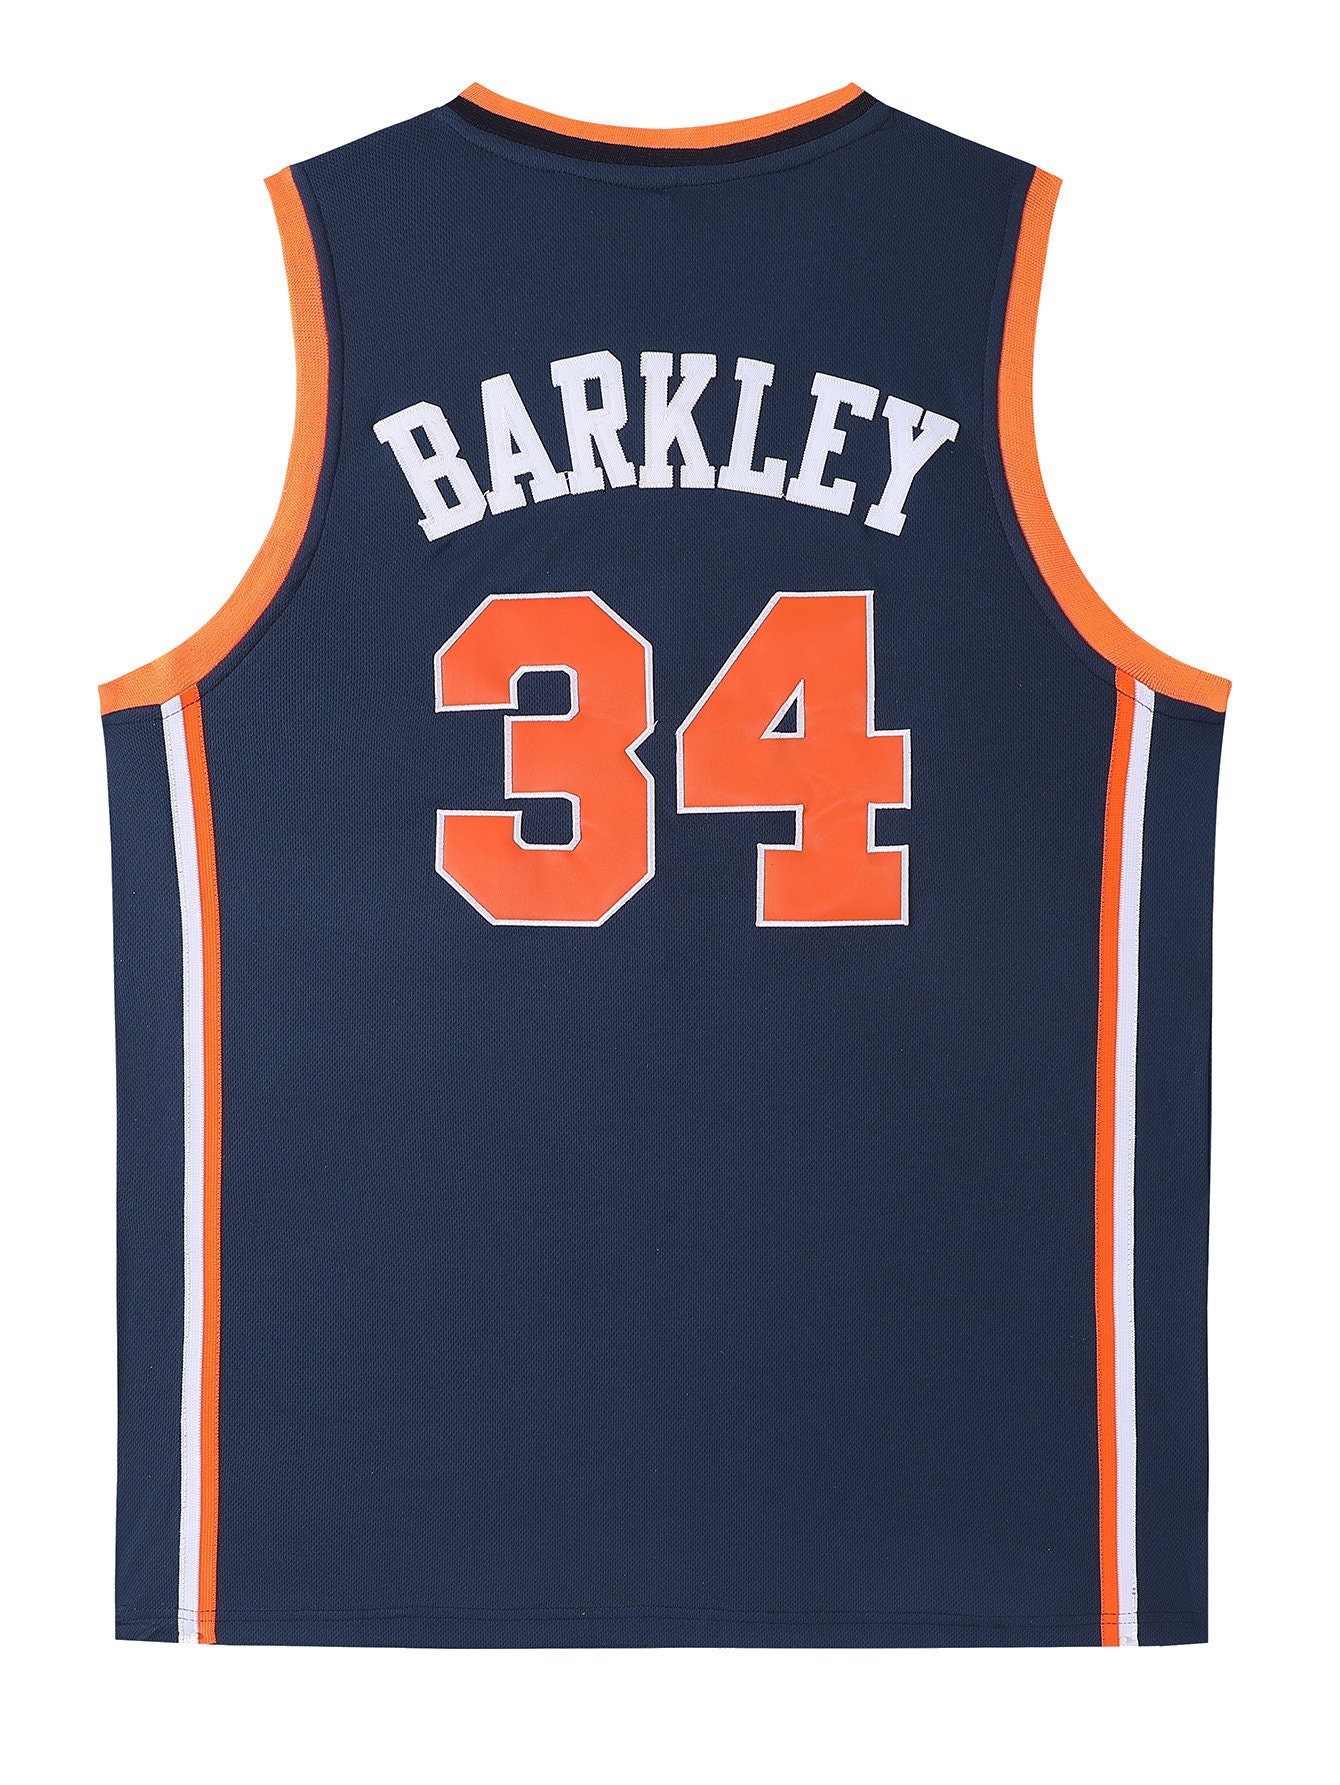 Charles Barkley Auburn Basketball Jersey College